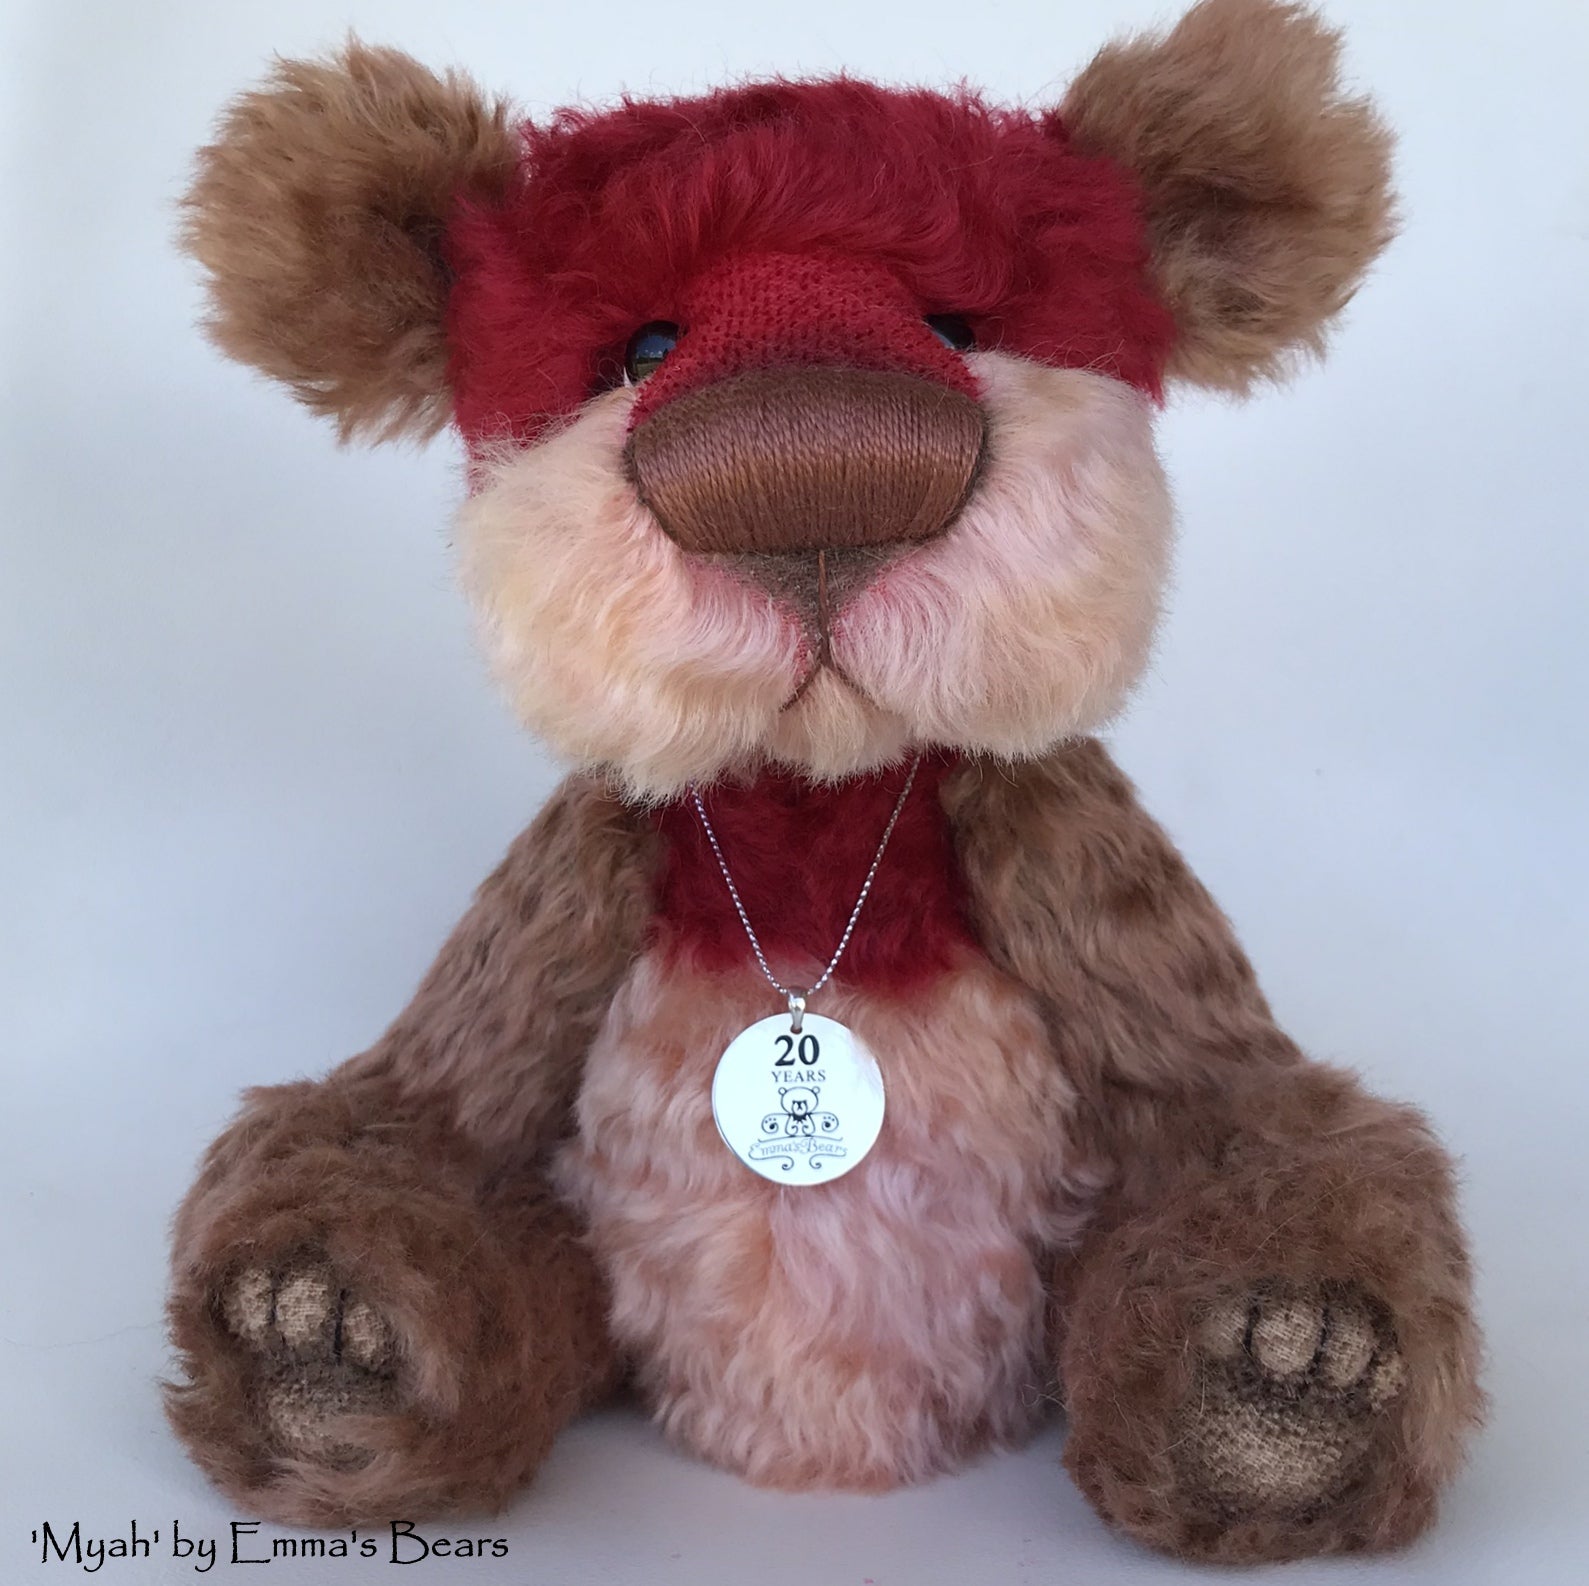 Myah - 20 Years of Emma's Bears Commemorative Teddy - OOAK in a series